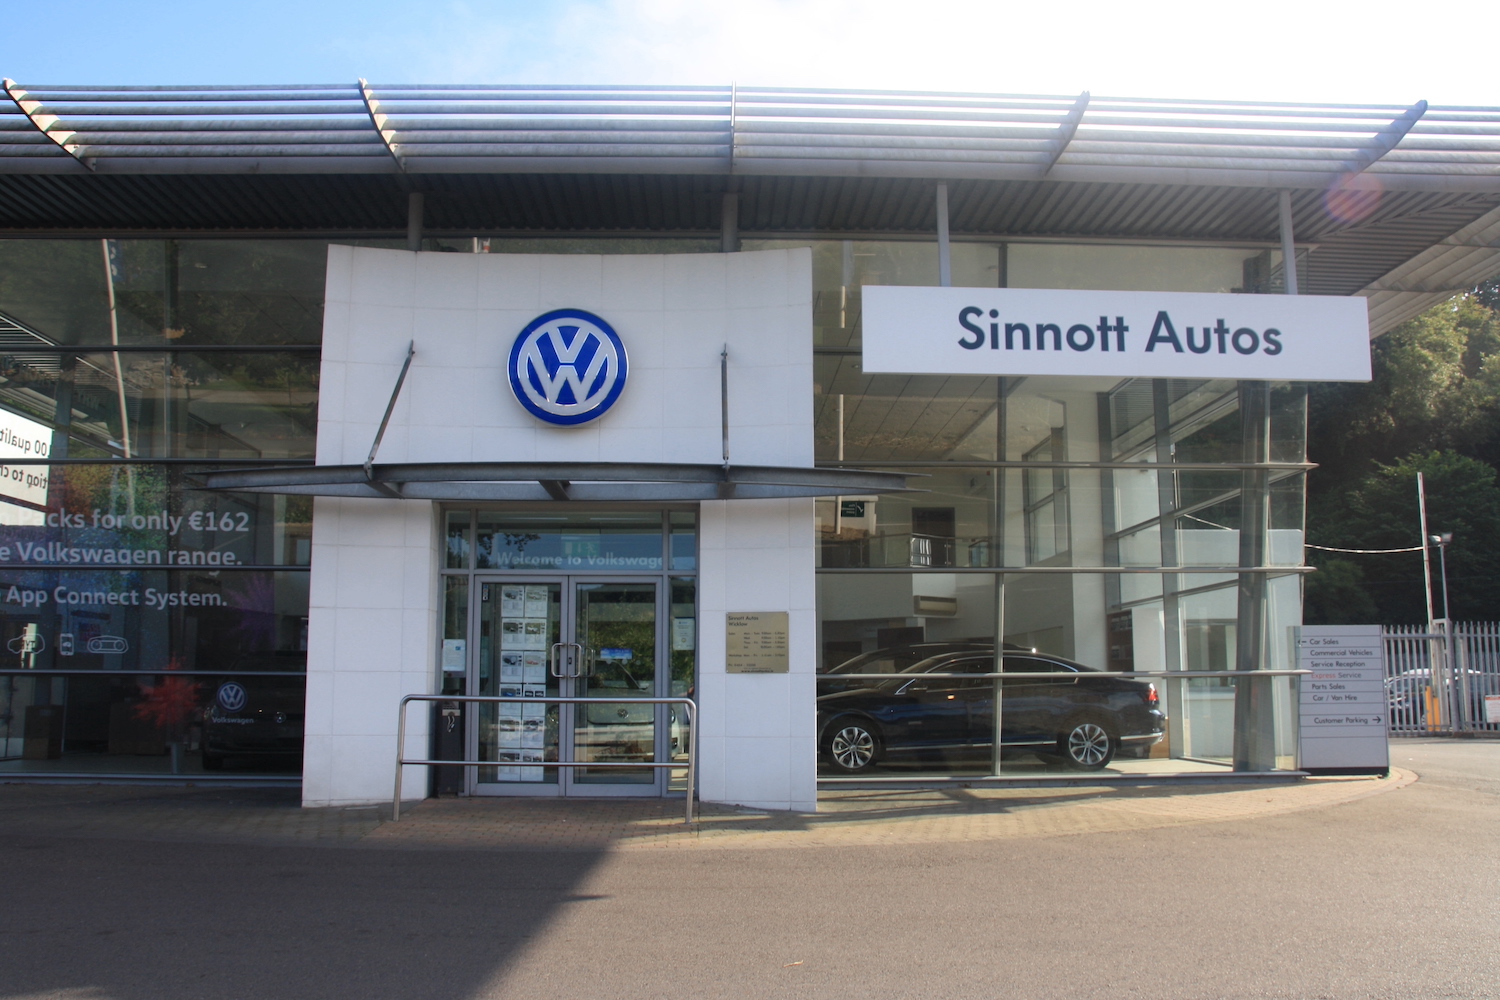 Car Industry News | Trinity Motor Group acquires Sinnott Autos | CompleteCar.ie